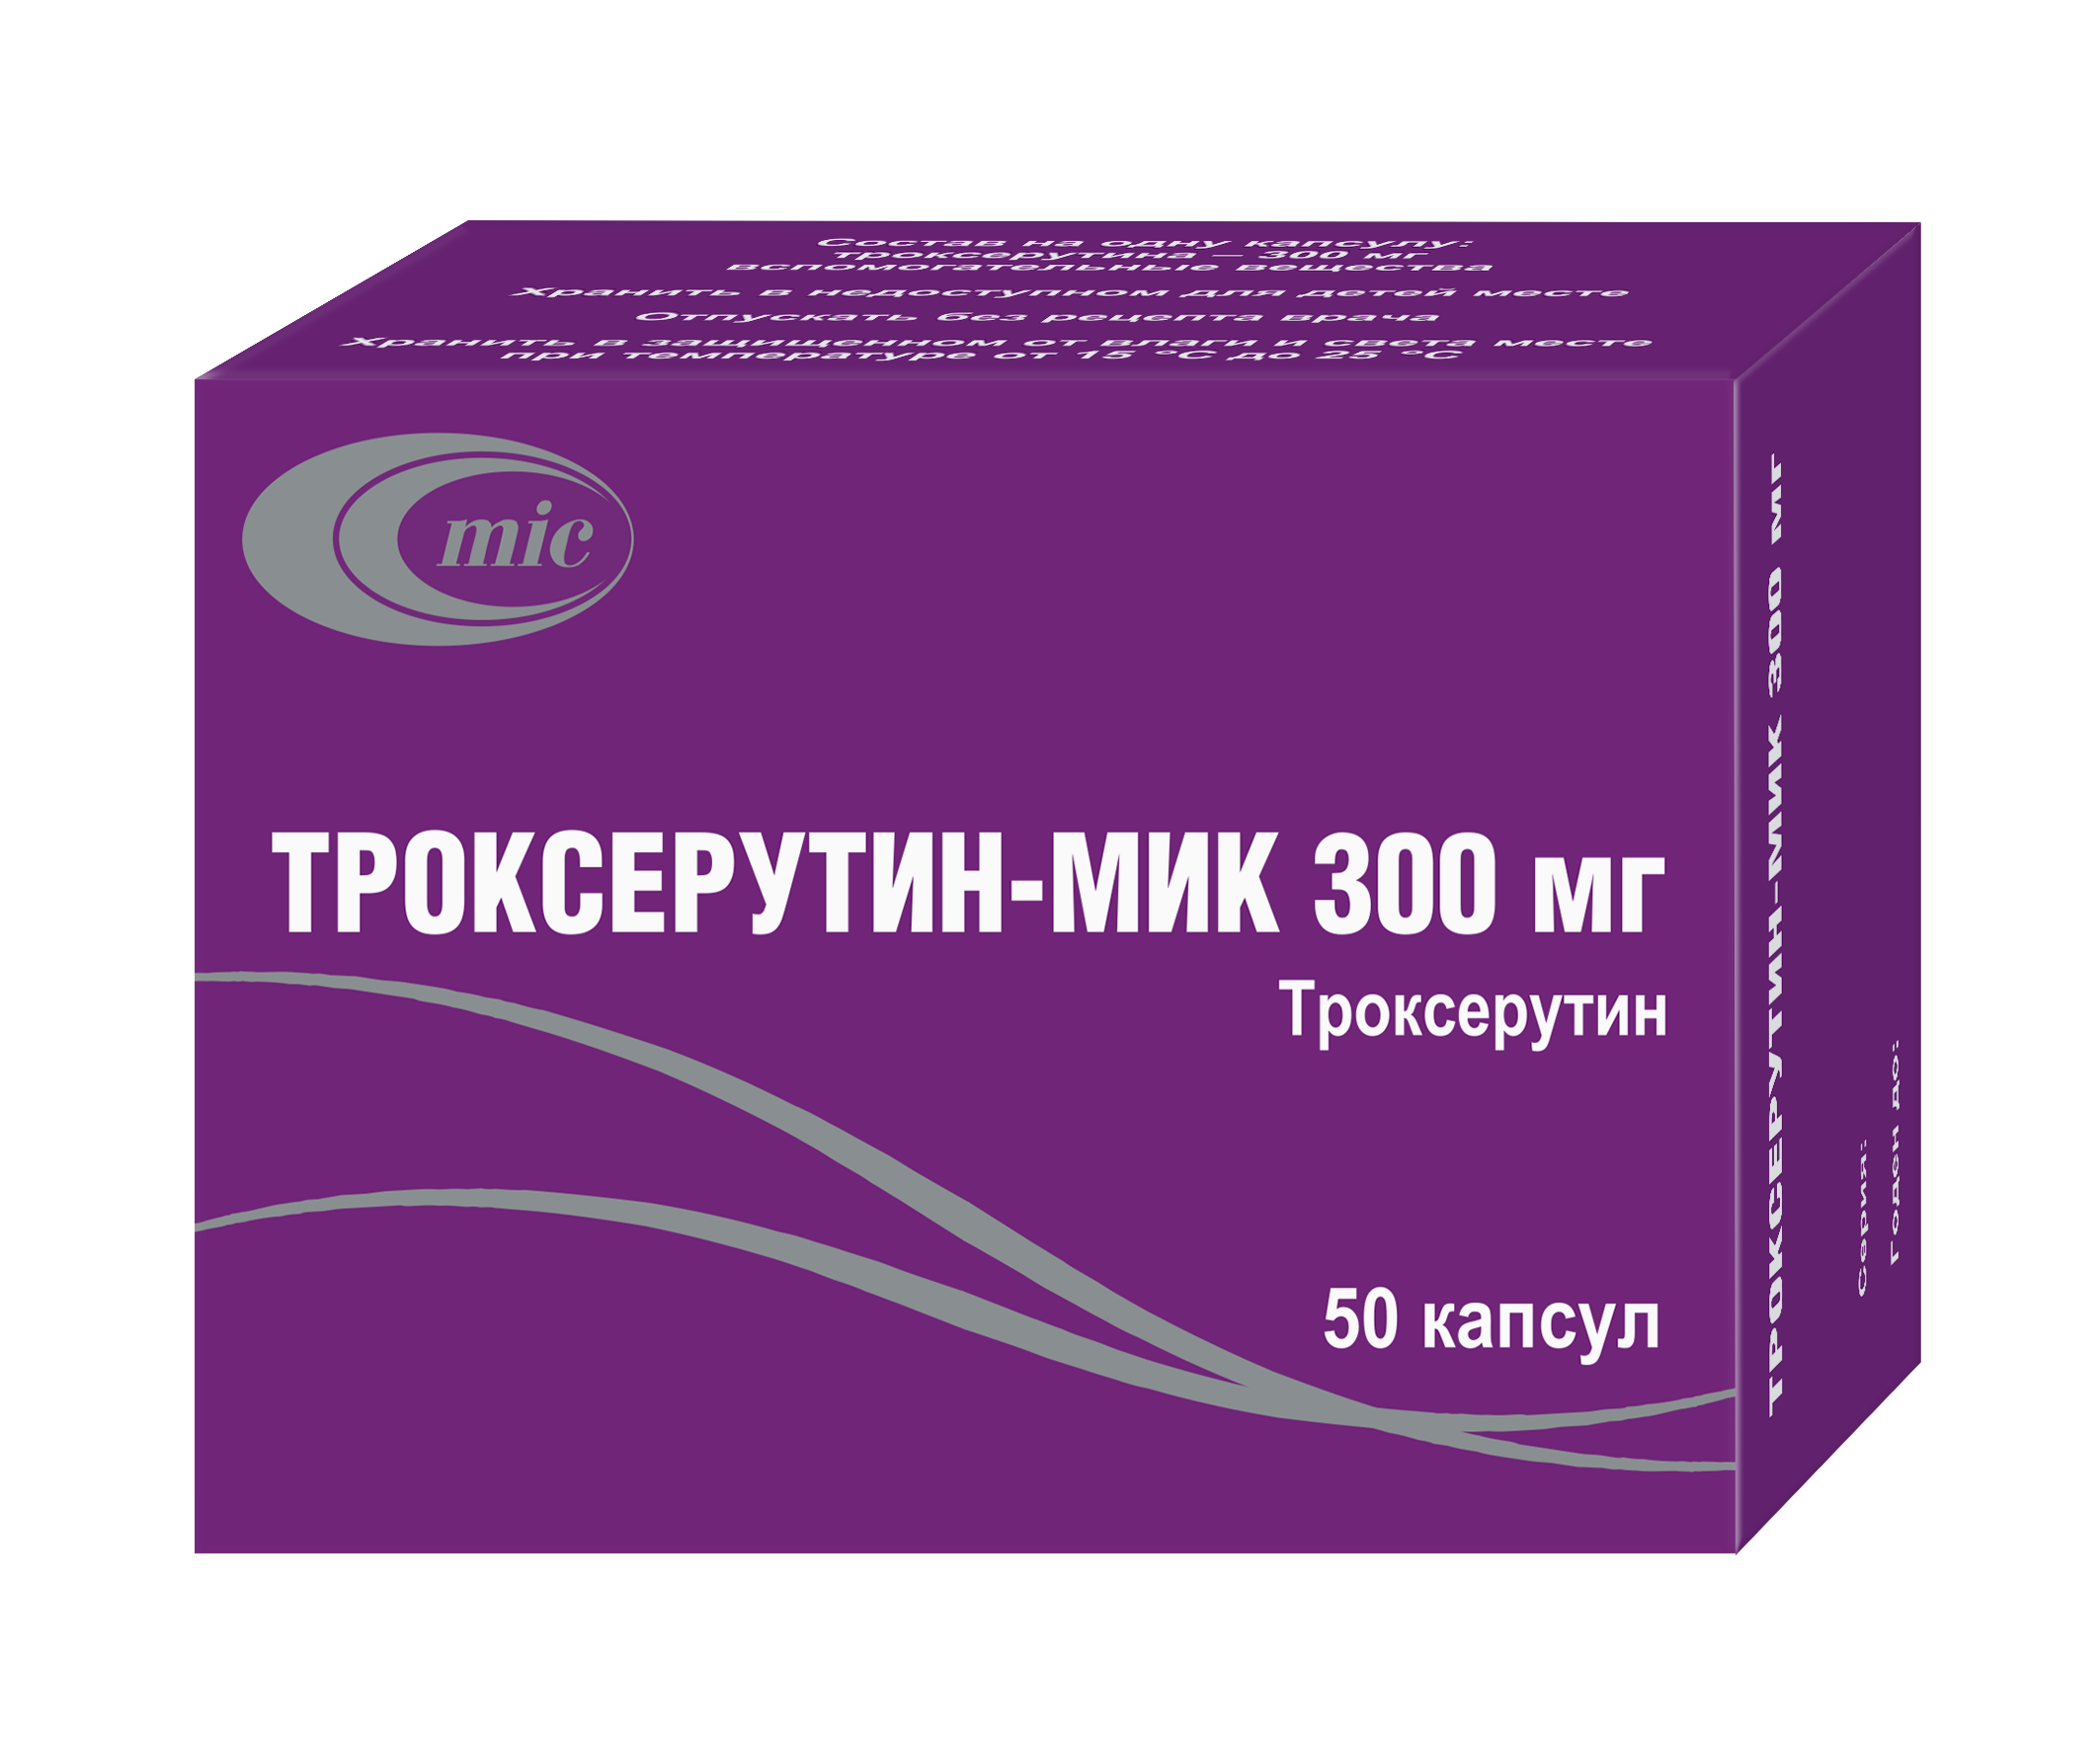 Троксерутин-МИК 300 мг - капсулы от варикоза и тромбофлебита